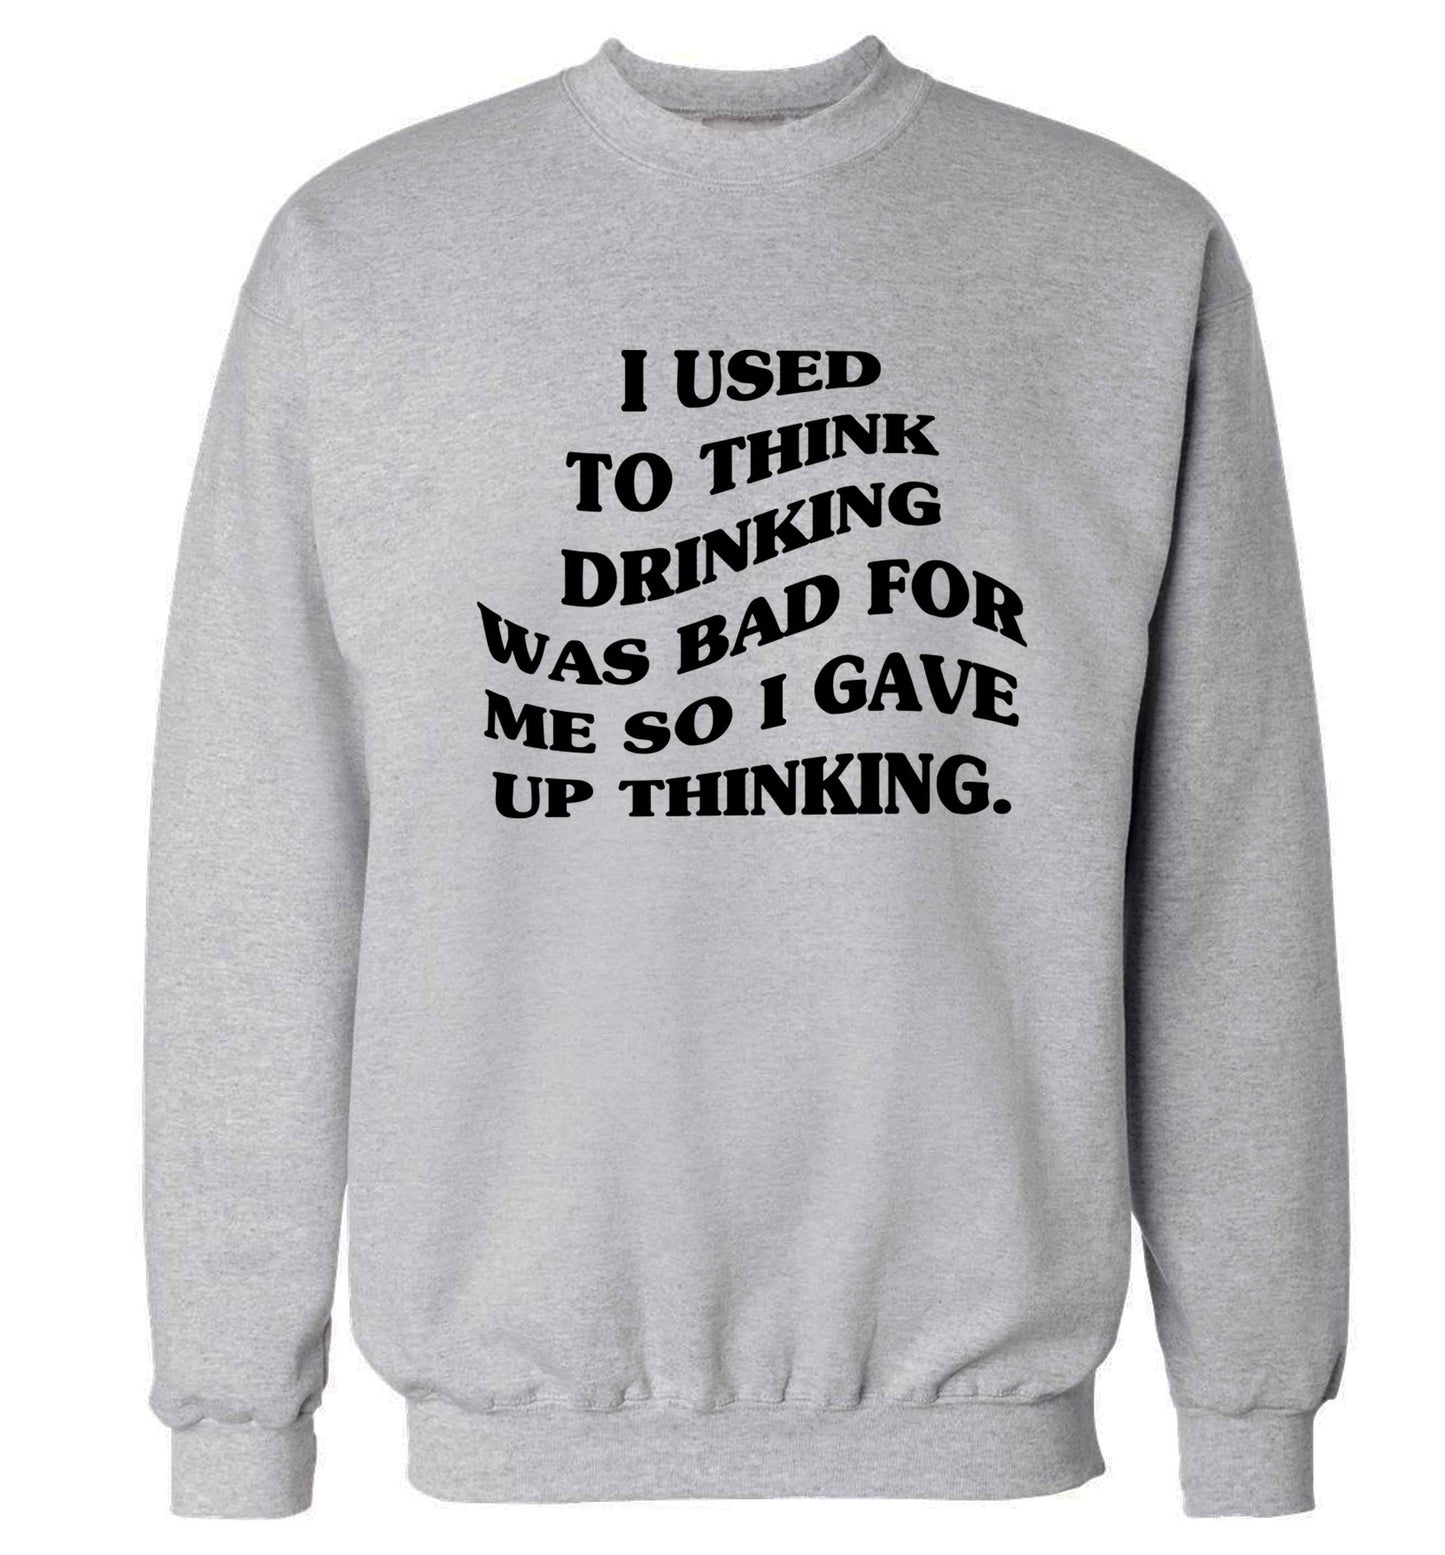 I used to think drinking was bad so I gave up thinking Adult's unisex grey Sweater 2XL